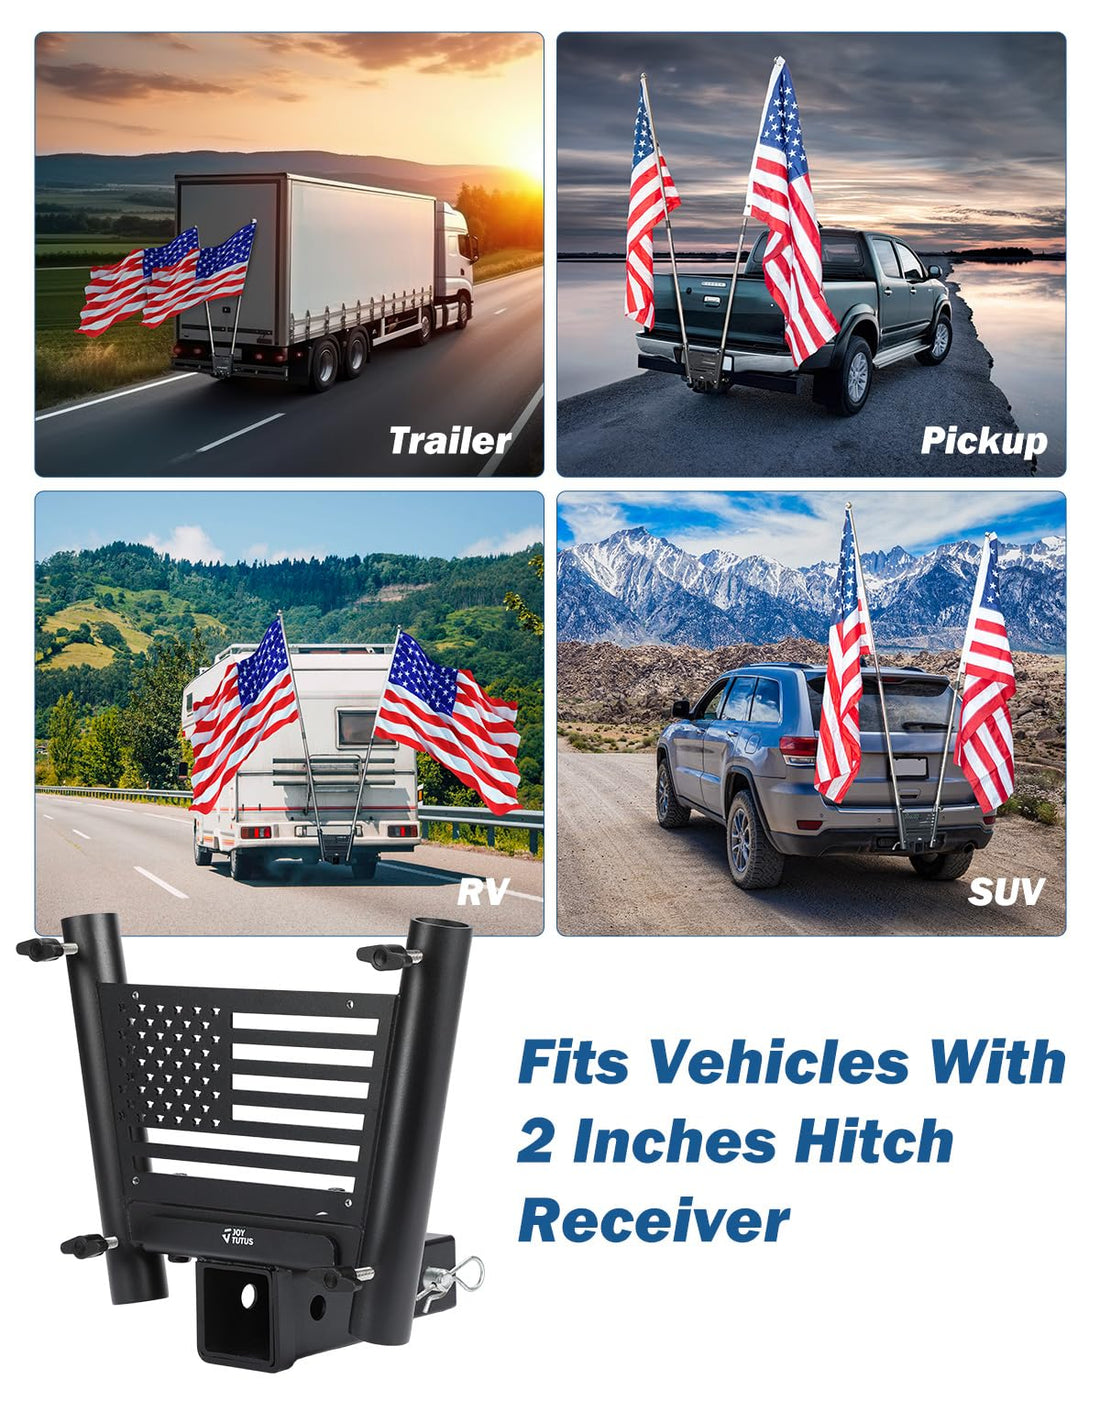 JOYTUTUS Hitch Mount Flag Pole Holder for Standard 2 Inch Receivers, Fits Truck RV SUV Pickup Camper Trailer